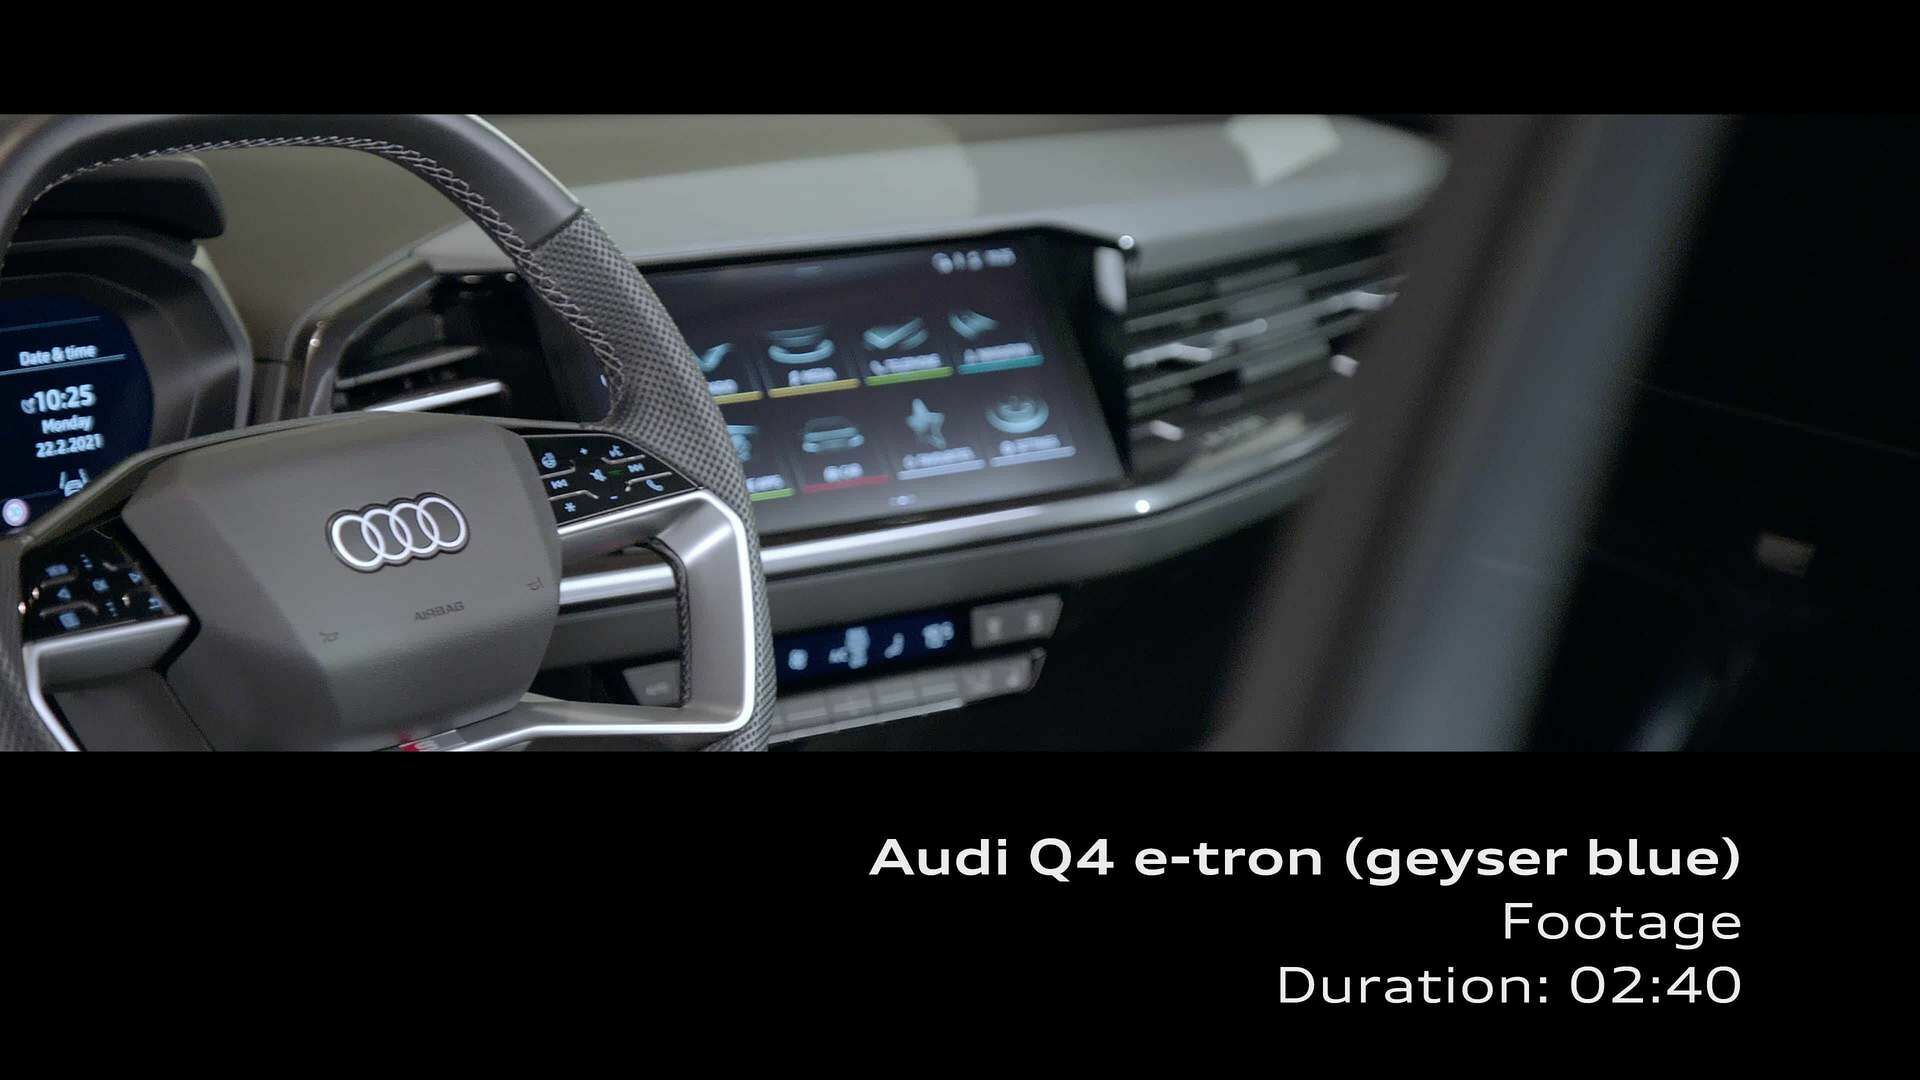 Footage: the interior of the Audi Q4 e-tron